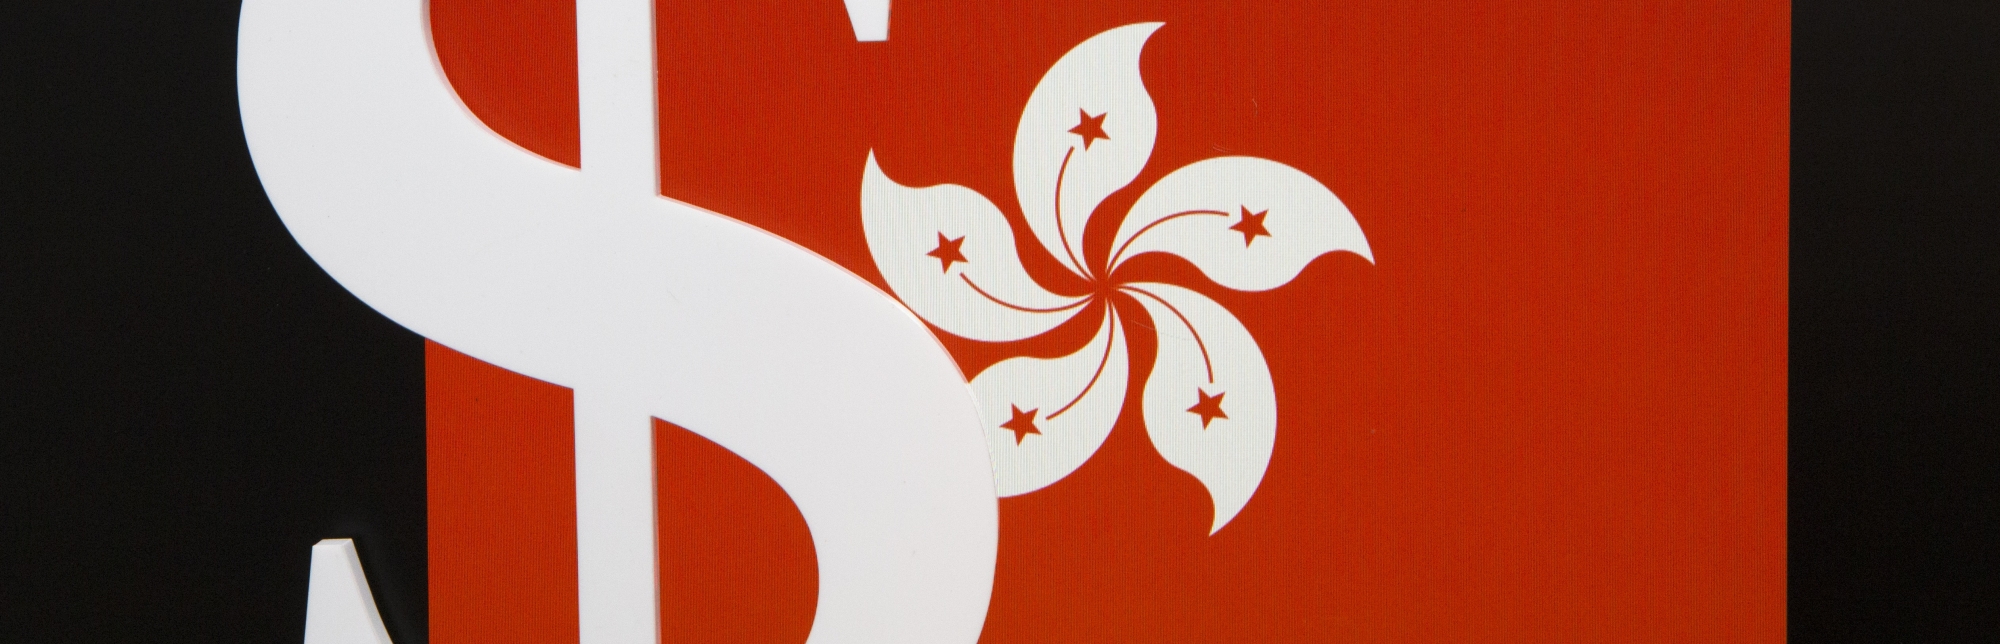 Symbol photo tax oasis, bank secrecy, tax investigation, etc. Hong Kong  flag and the dollar symbol.